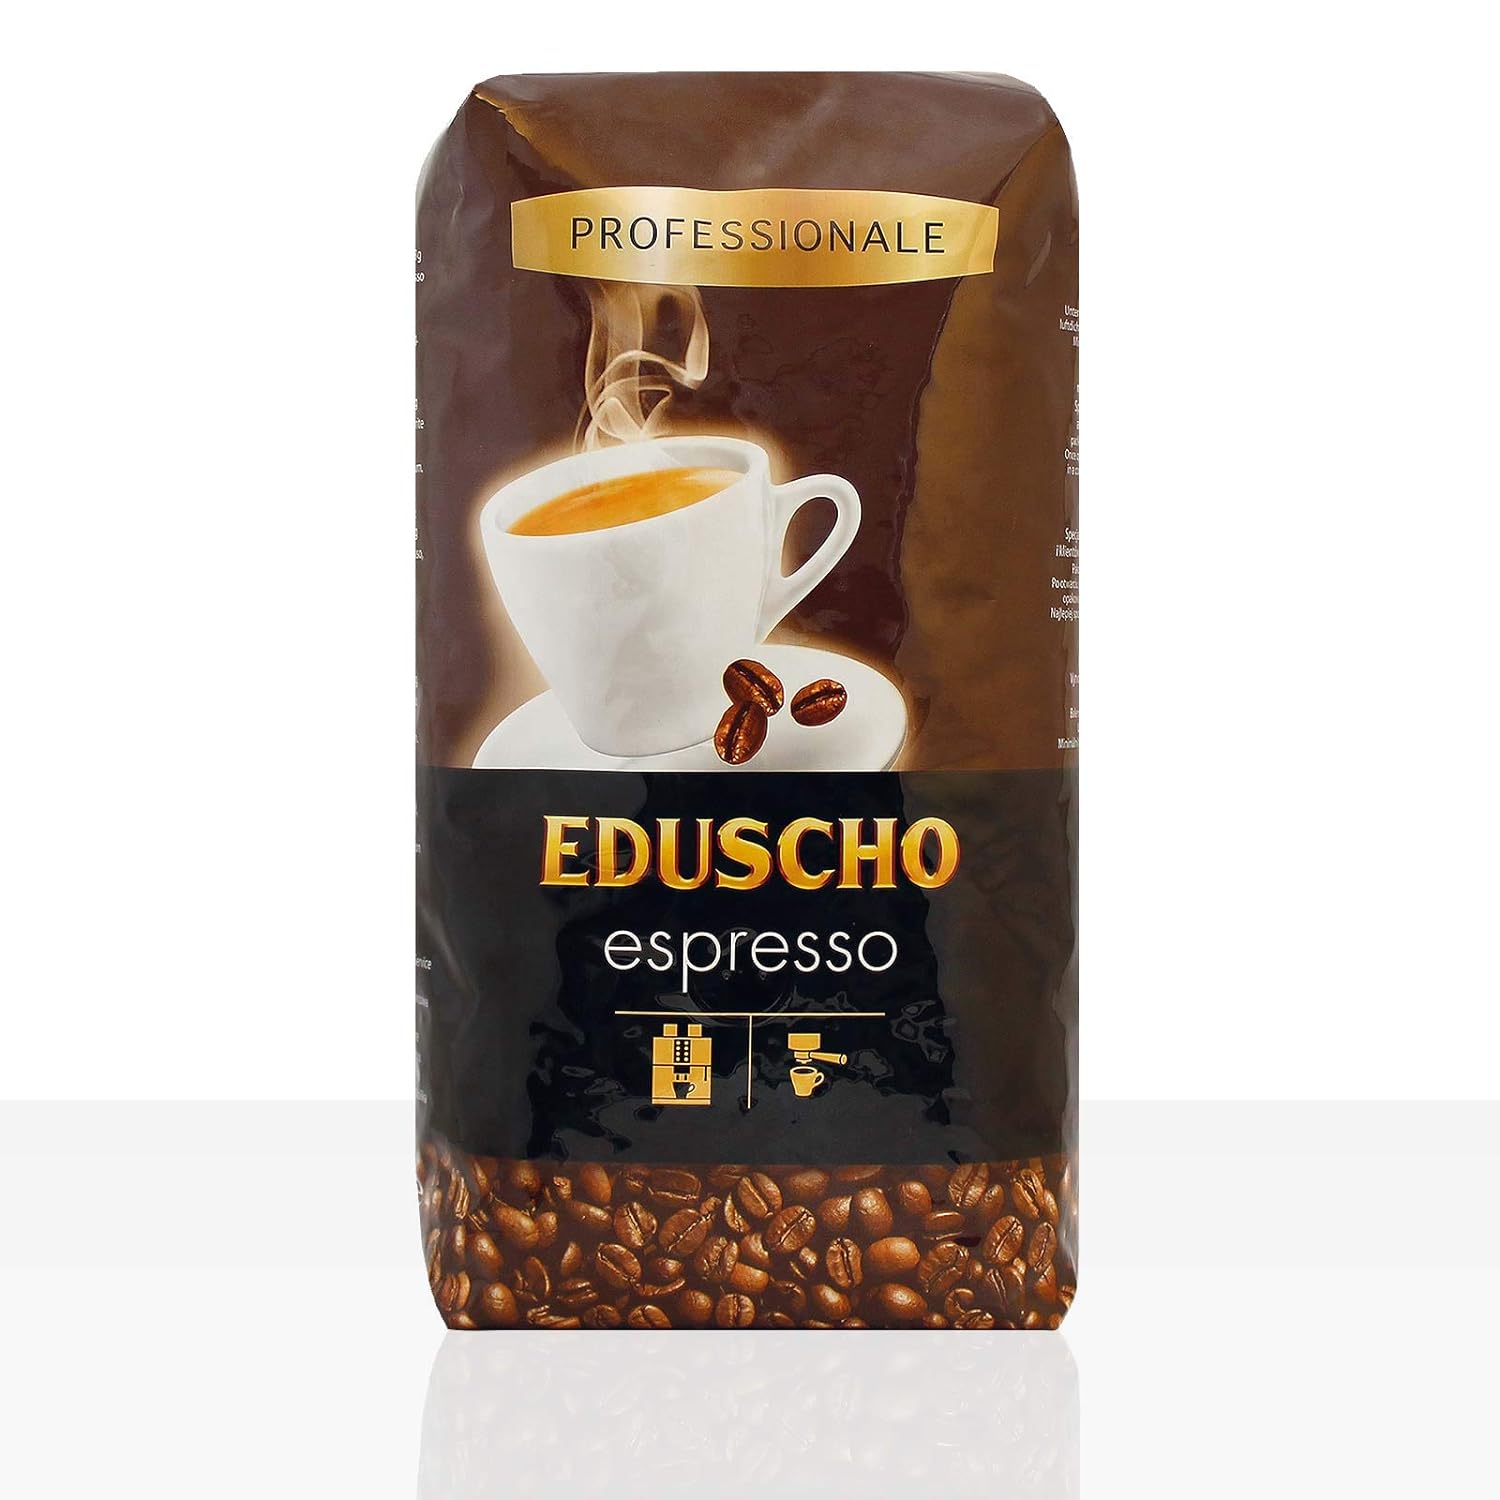 Eduscho Professional Espresso 6 x 1 kg Whole Bean